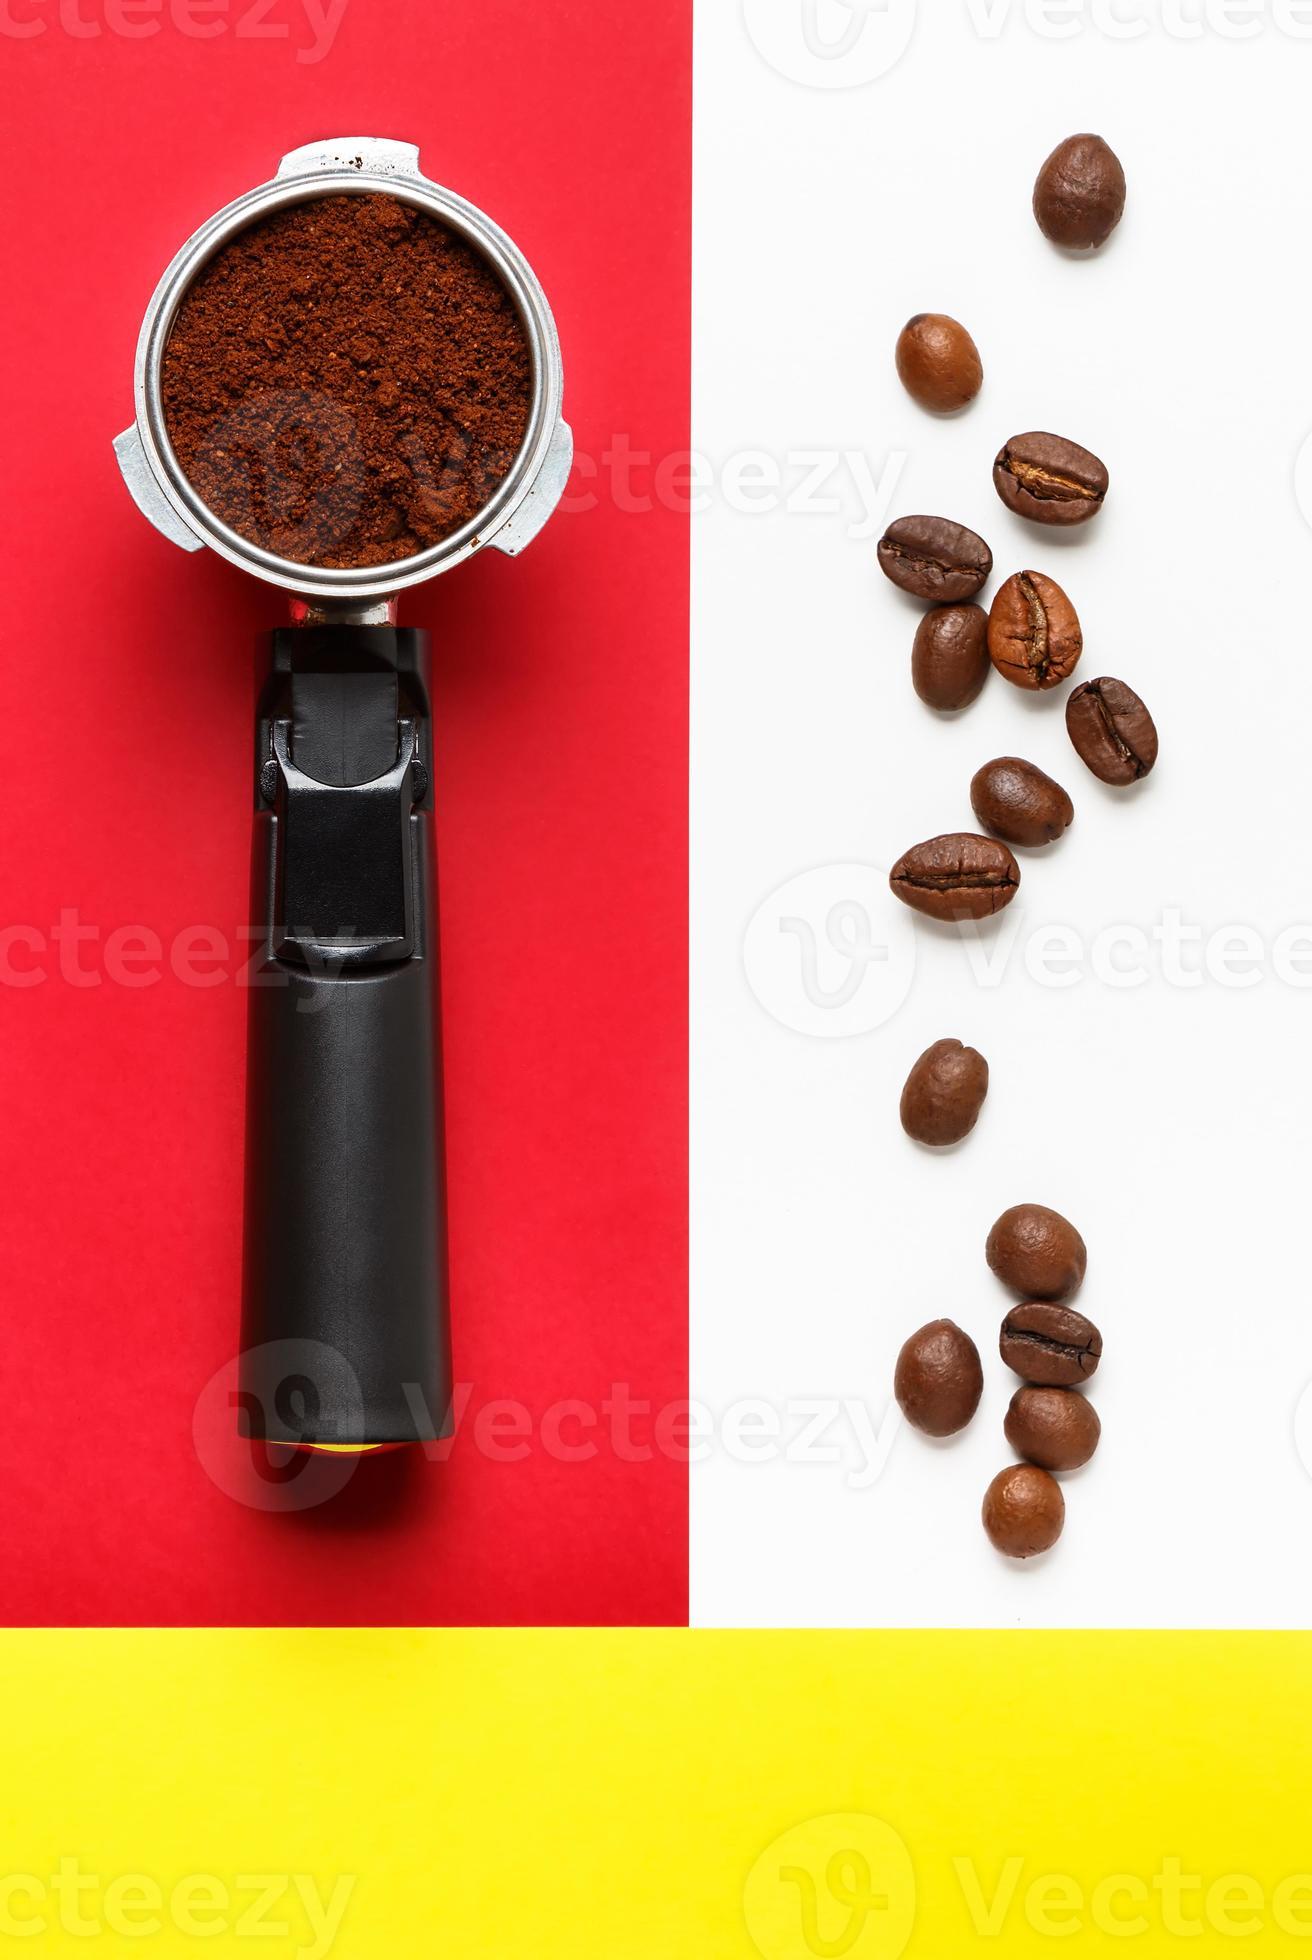 Cafe grain espresso rouge - Café en grain